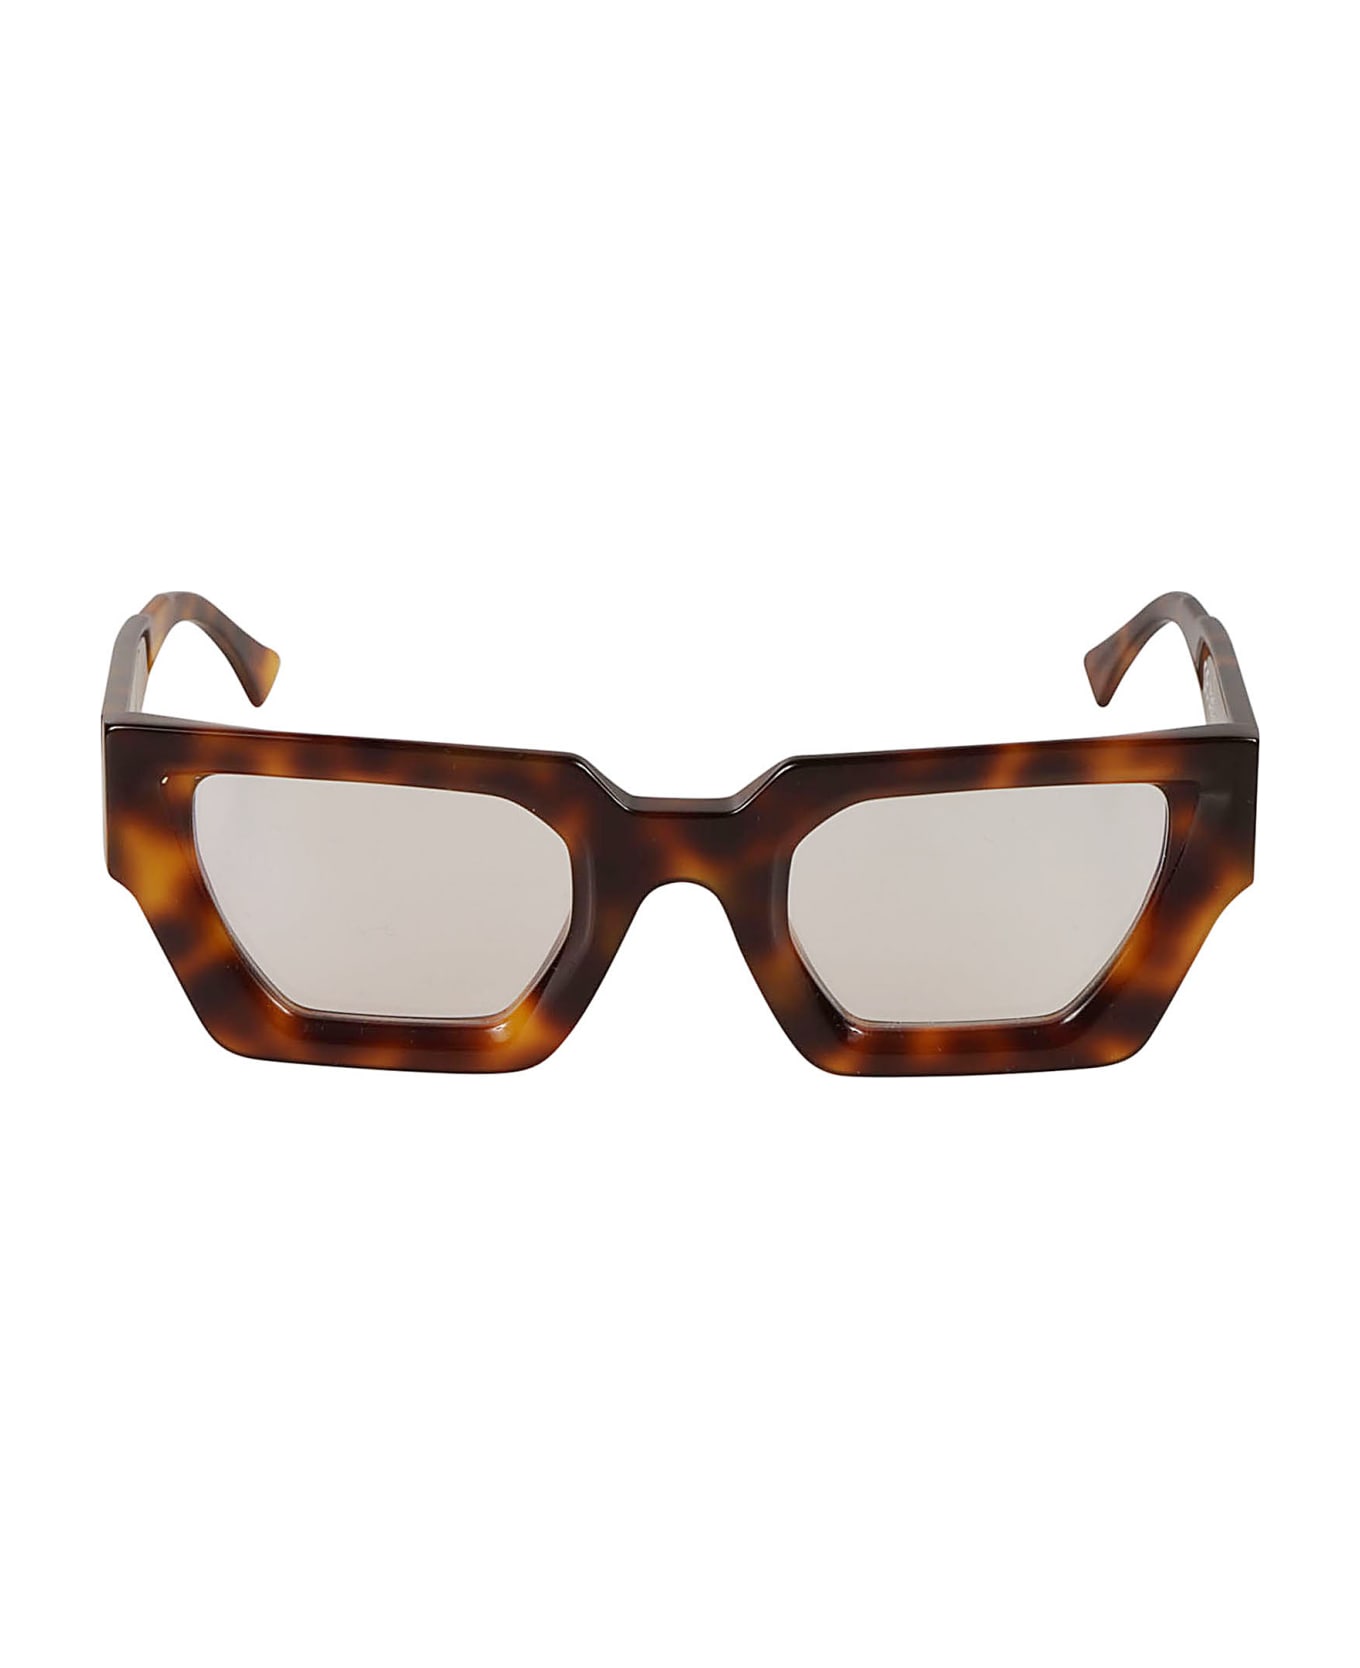 Kuboraum F3 Glasses Glasses - havana